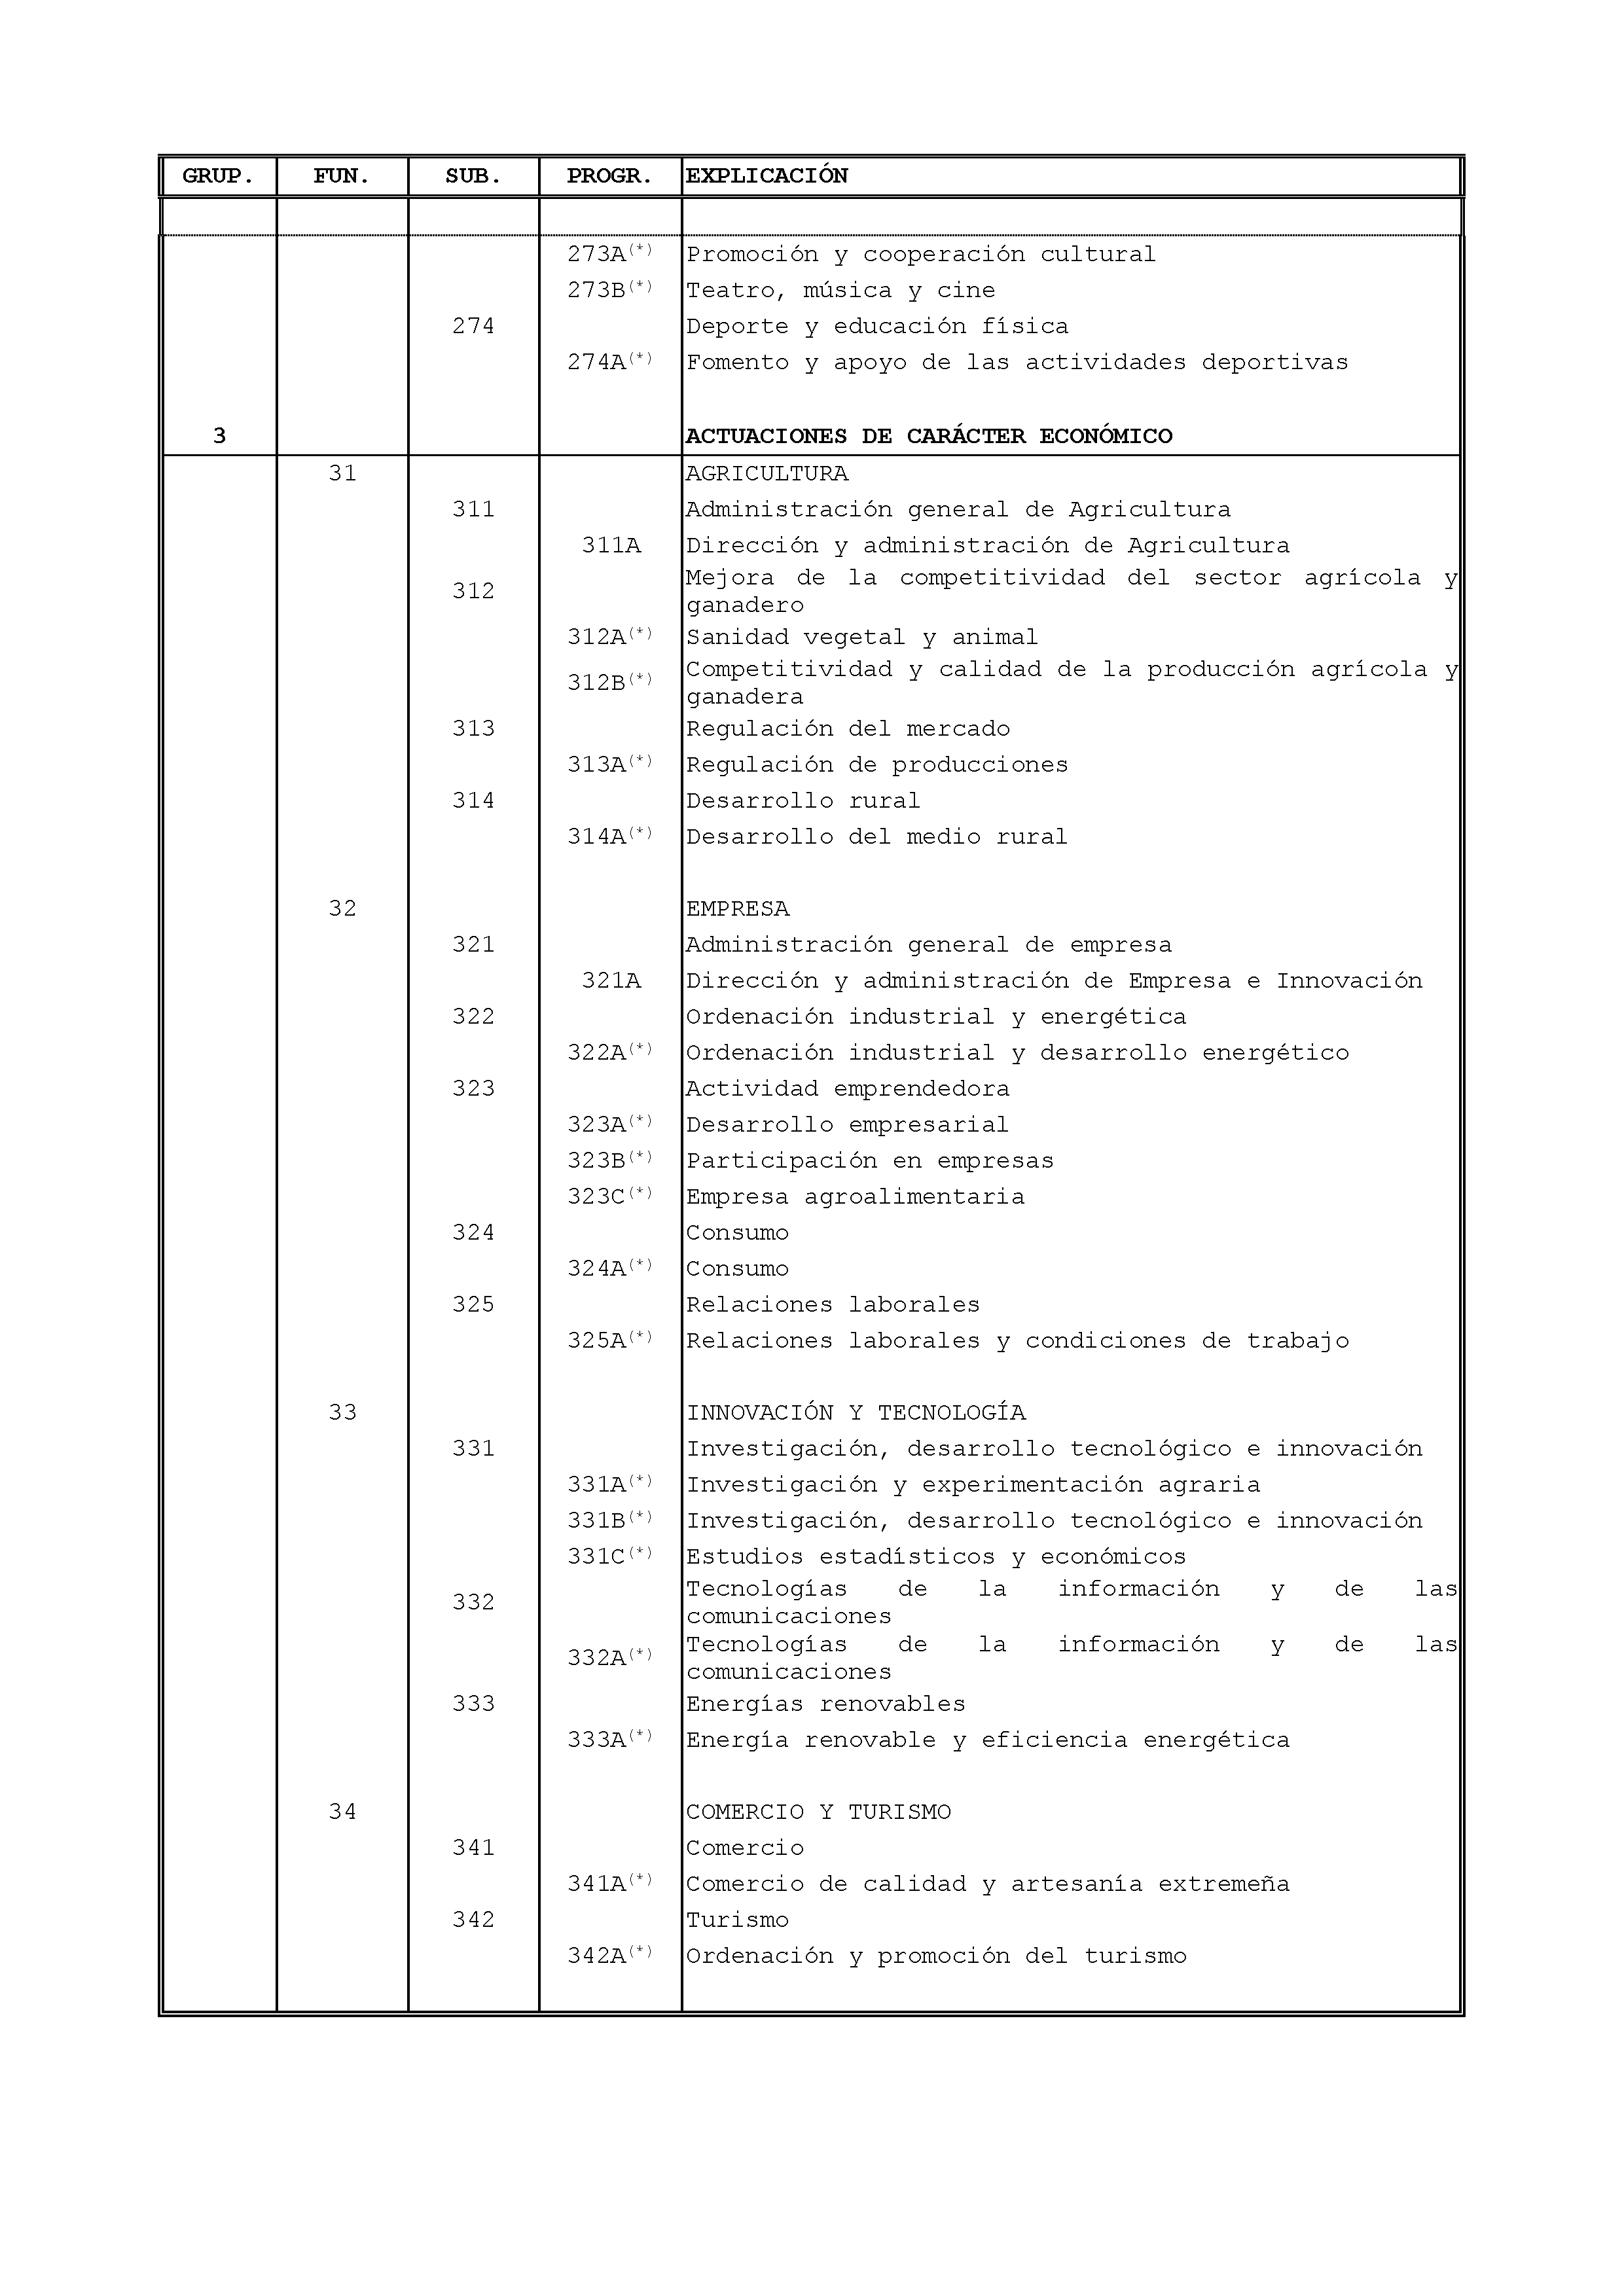 ANEXO IV CLASIFICACIÓN FUNCIONAL Y DE PROGRAMAS Pag 3